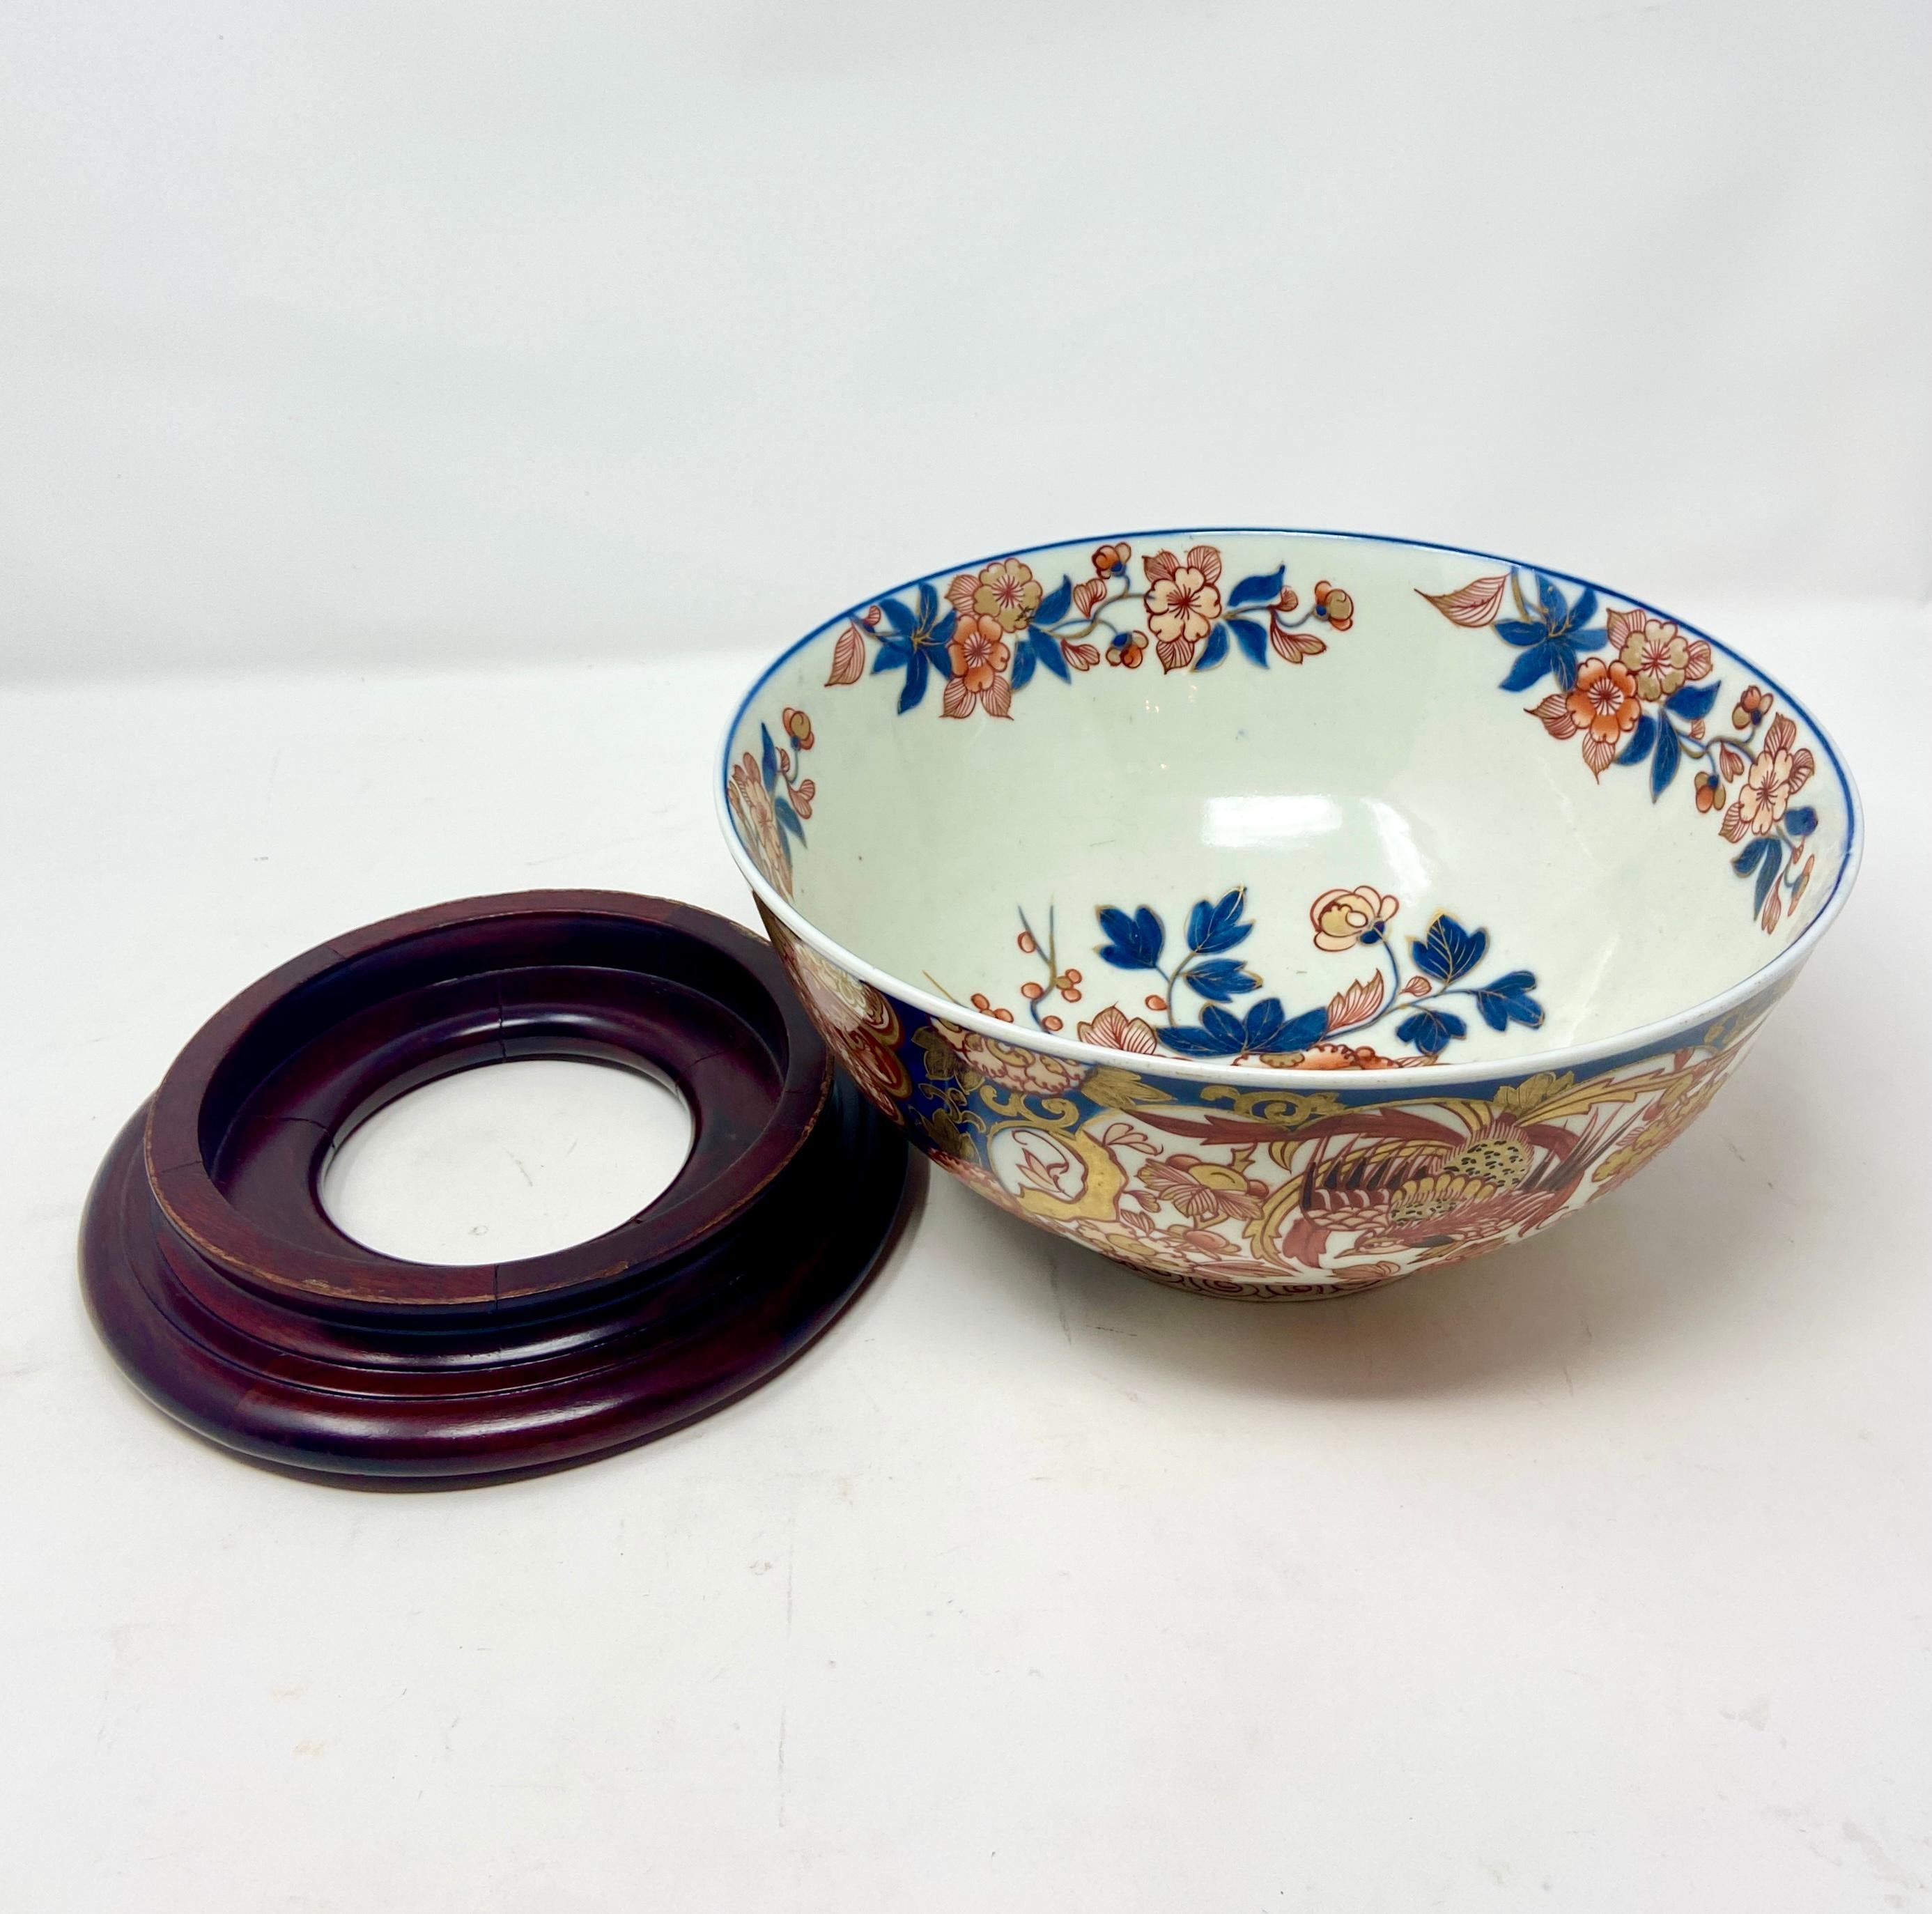 20th Century Antique Japanese Imari Porcelain Bowl on Teakwood Stand, Circa 1900